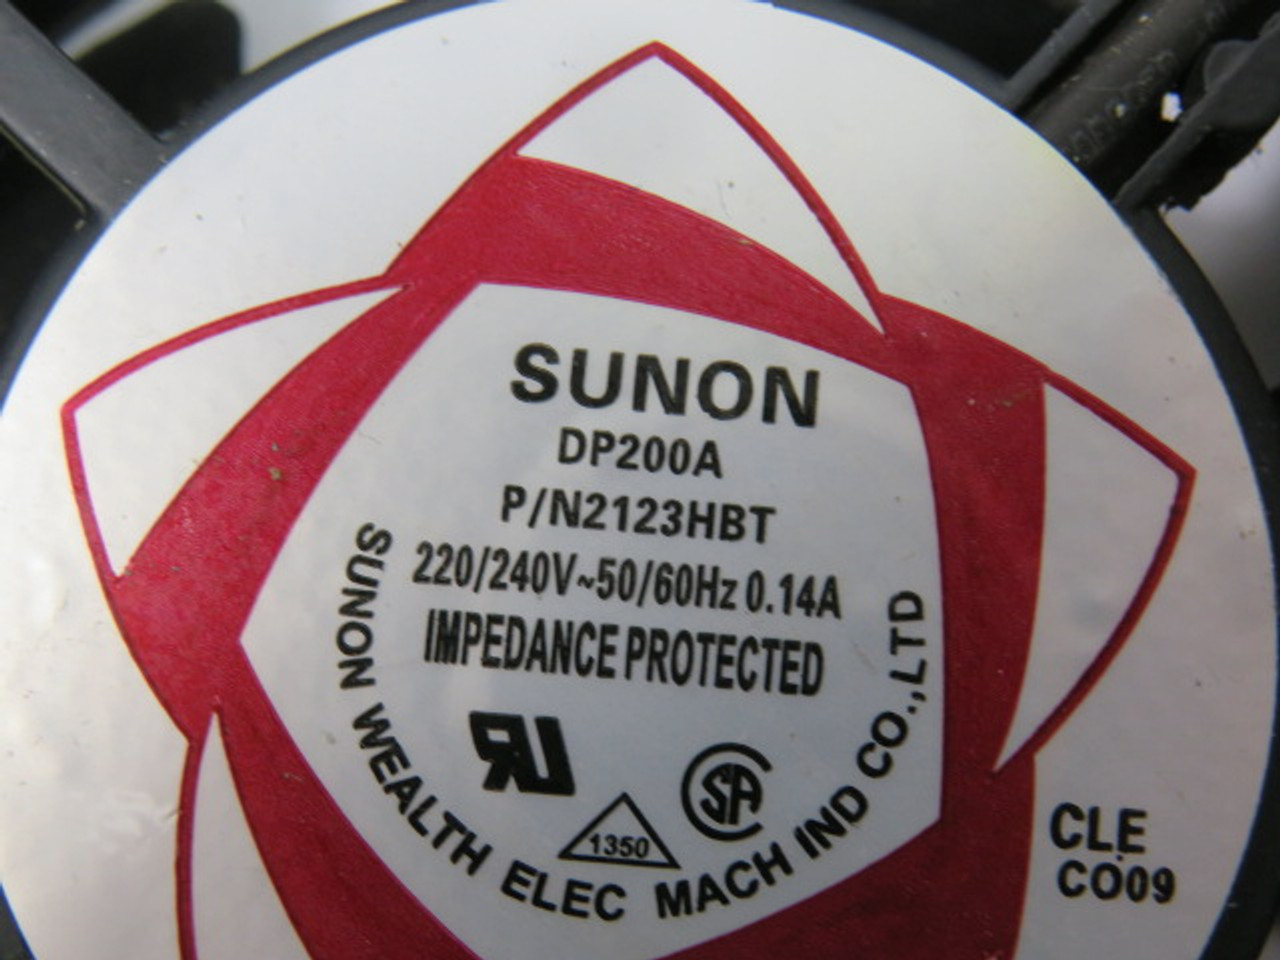 Sunon DP200A 2123HBT Axial Fan 220/240V 50/60Hz. 0.14A USED